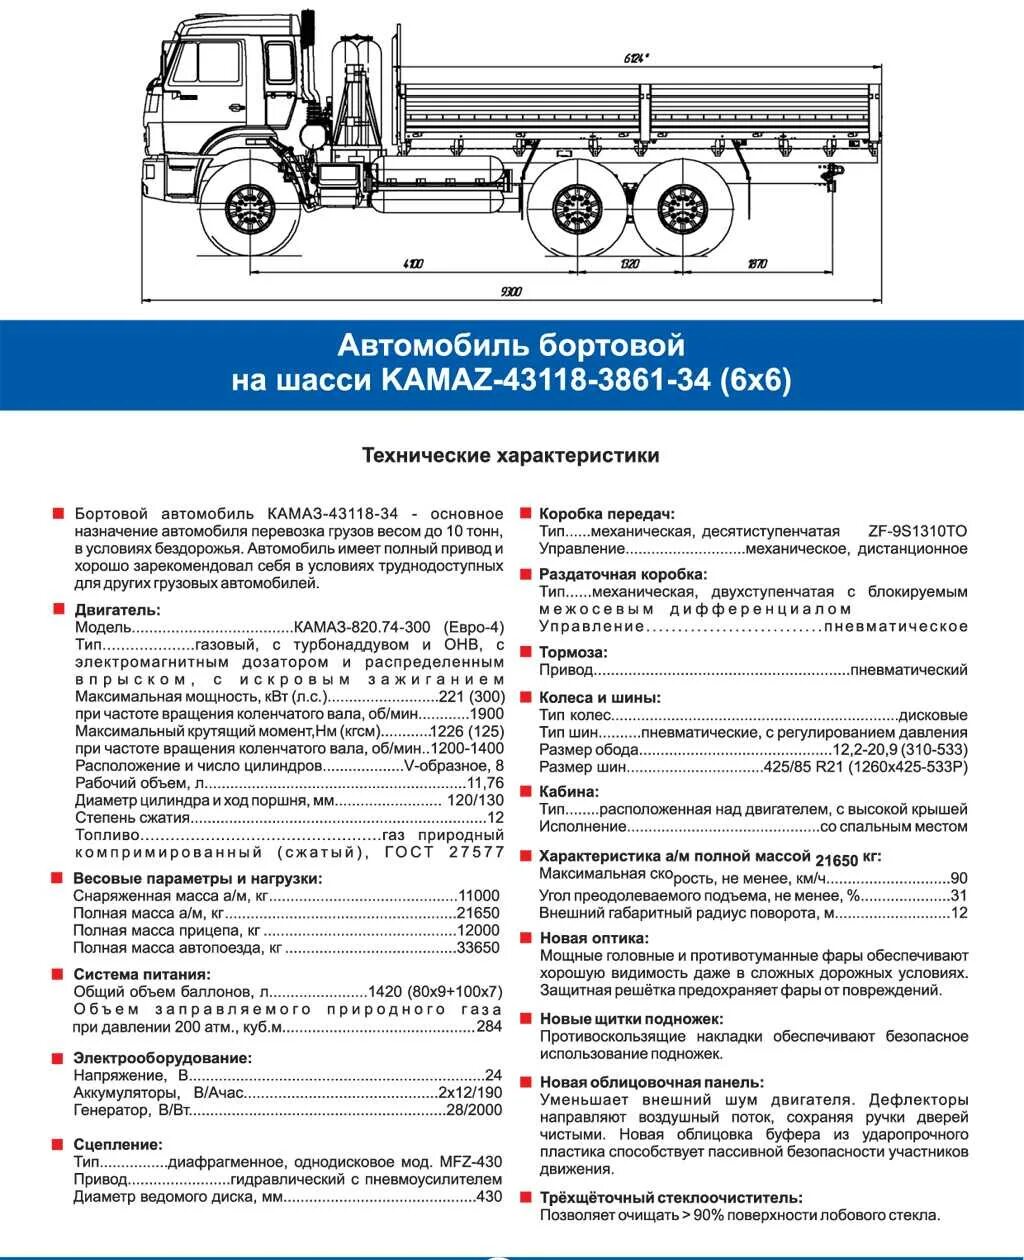 ТТХ КАМАЗ 4310. Технические характеристики KAMAZ-5320/. Характеристики КАМАЗ 43118 бортовой. КАМАЗ 43118 бортовой технические характеристики.